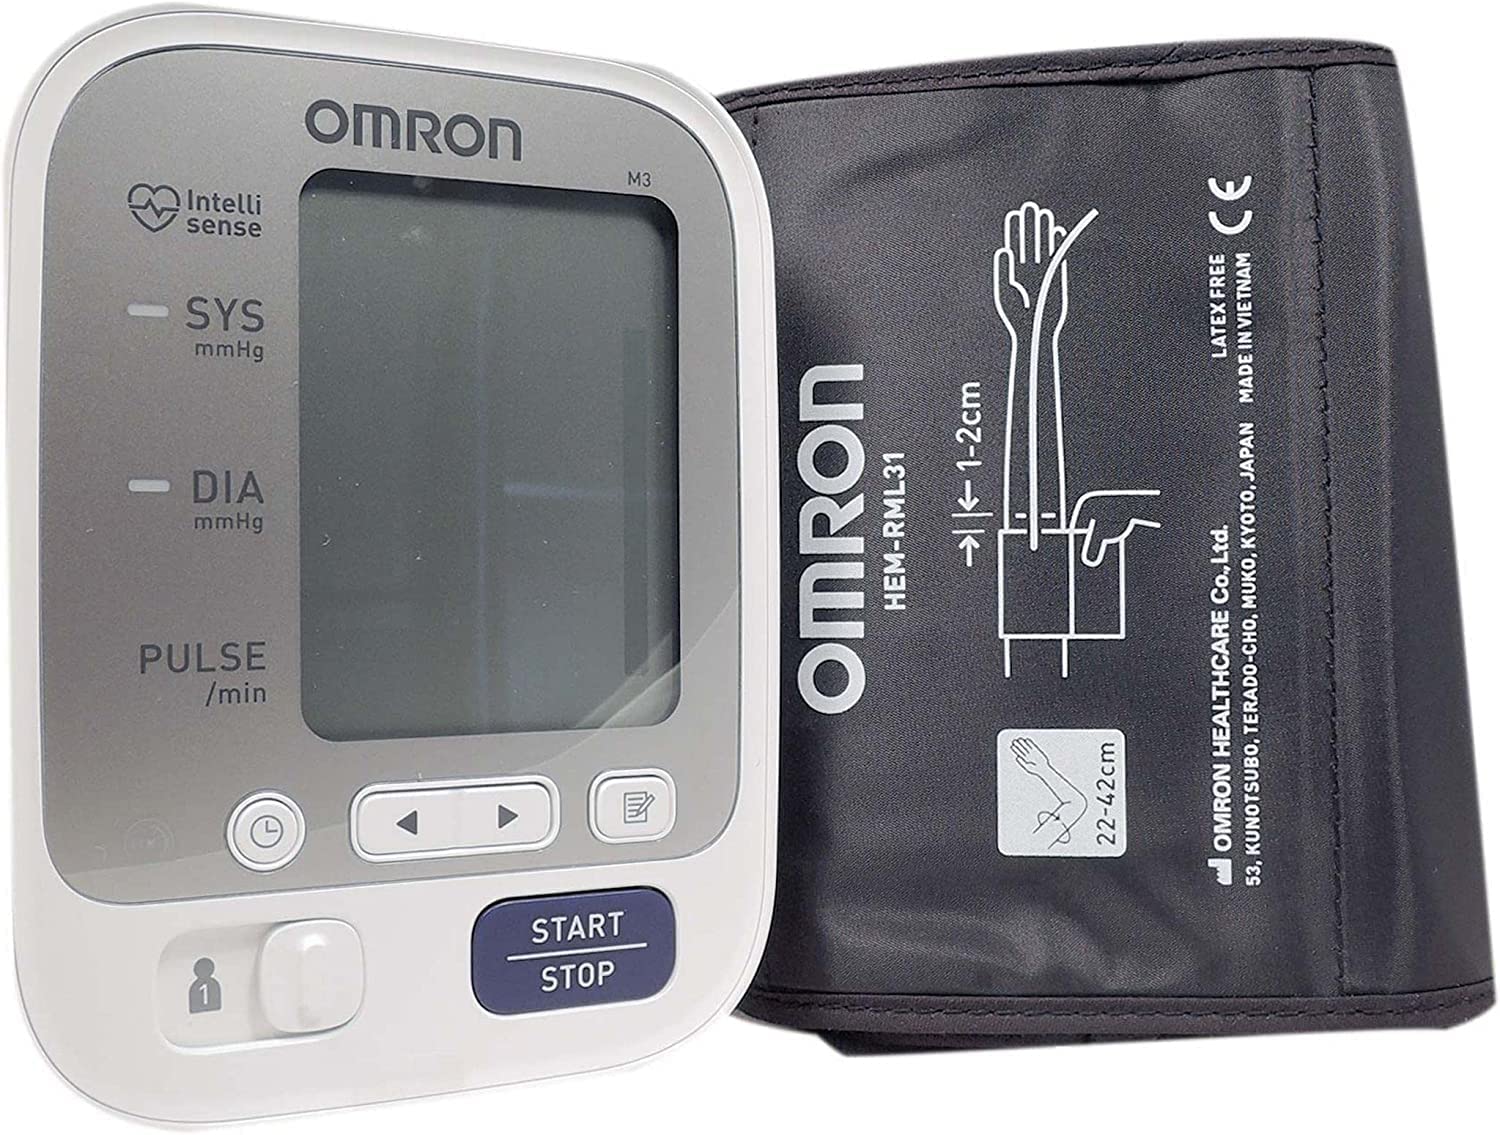 Omron HEM-7131-E, M3 Automatic Blood Pressure Monitor